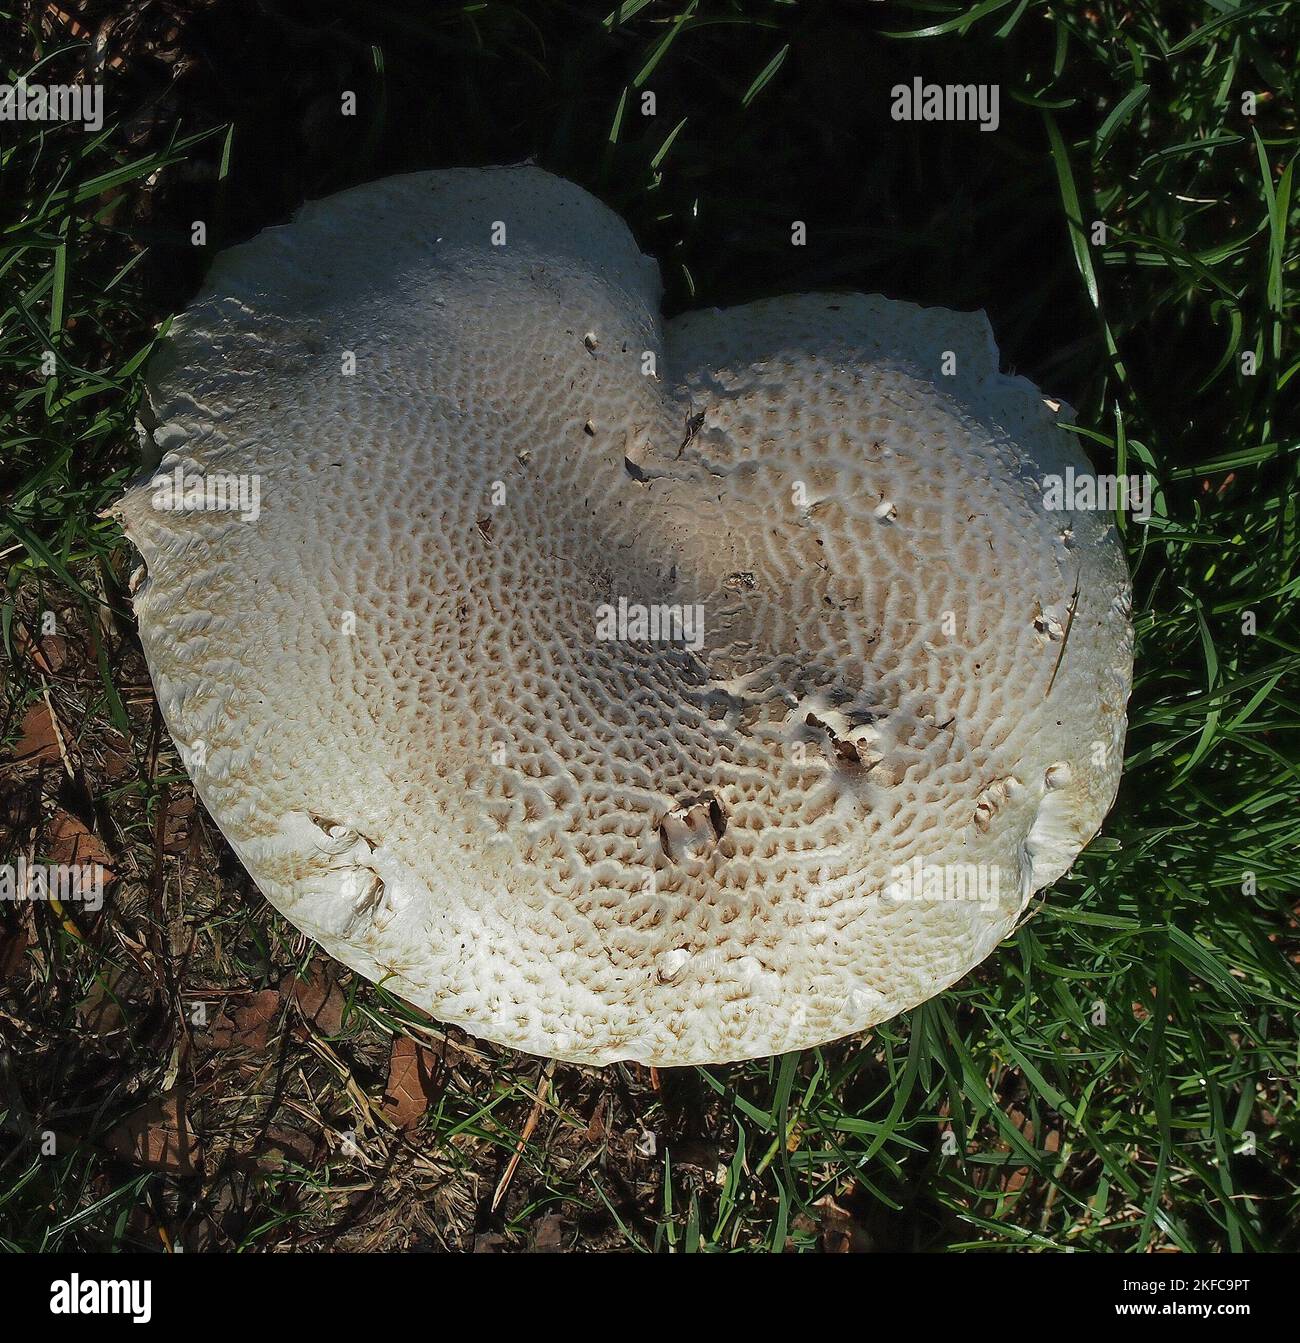 two fungi in Cann Park, Union City, California Stock Photo